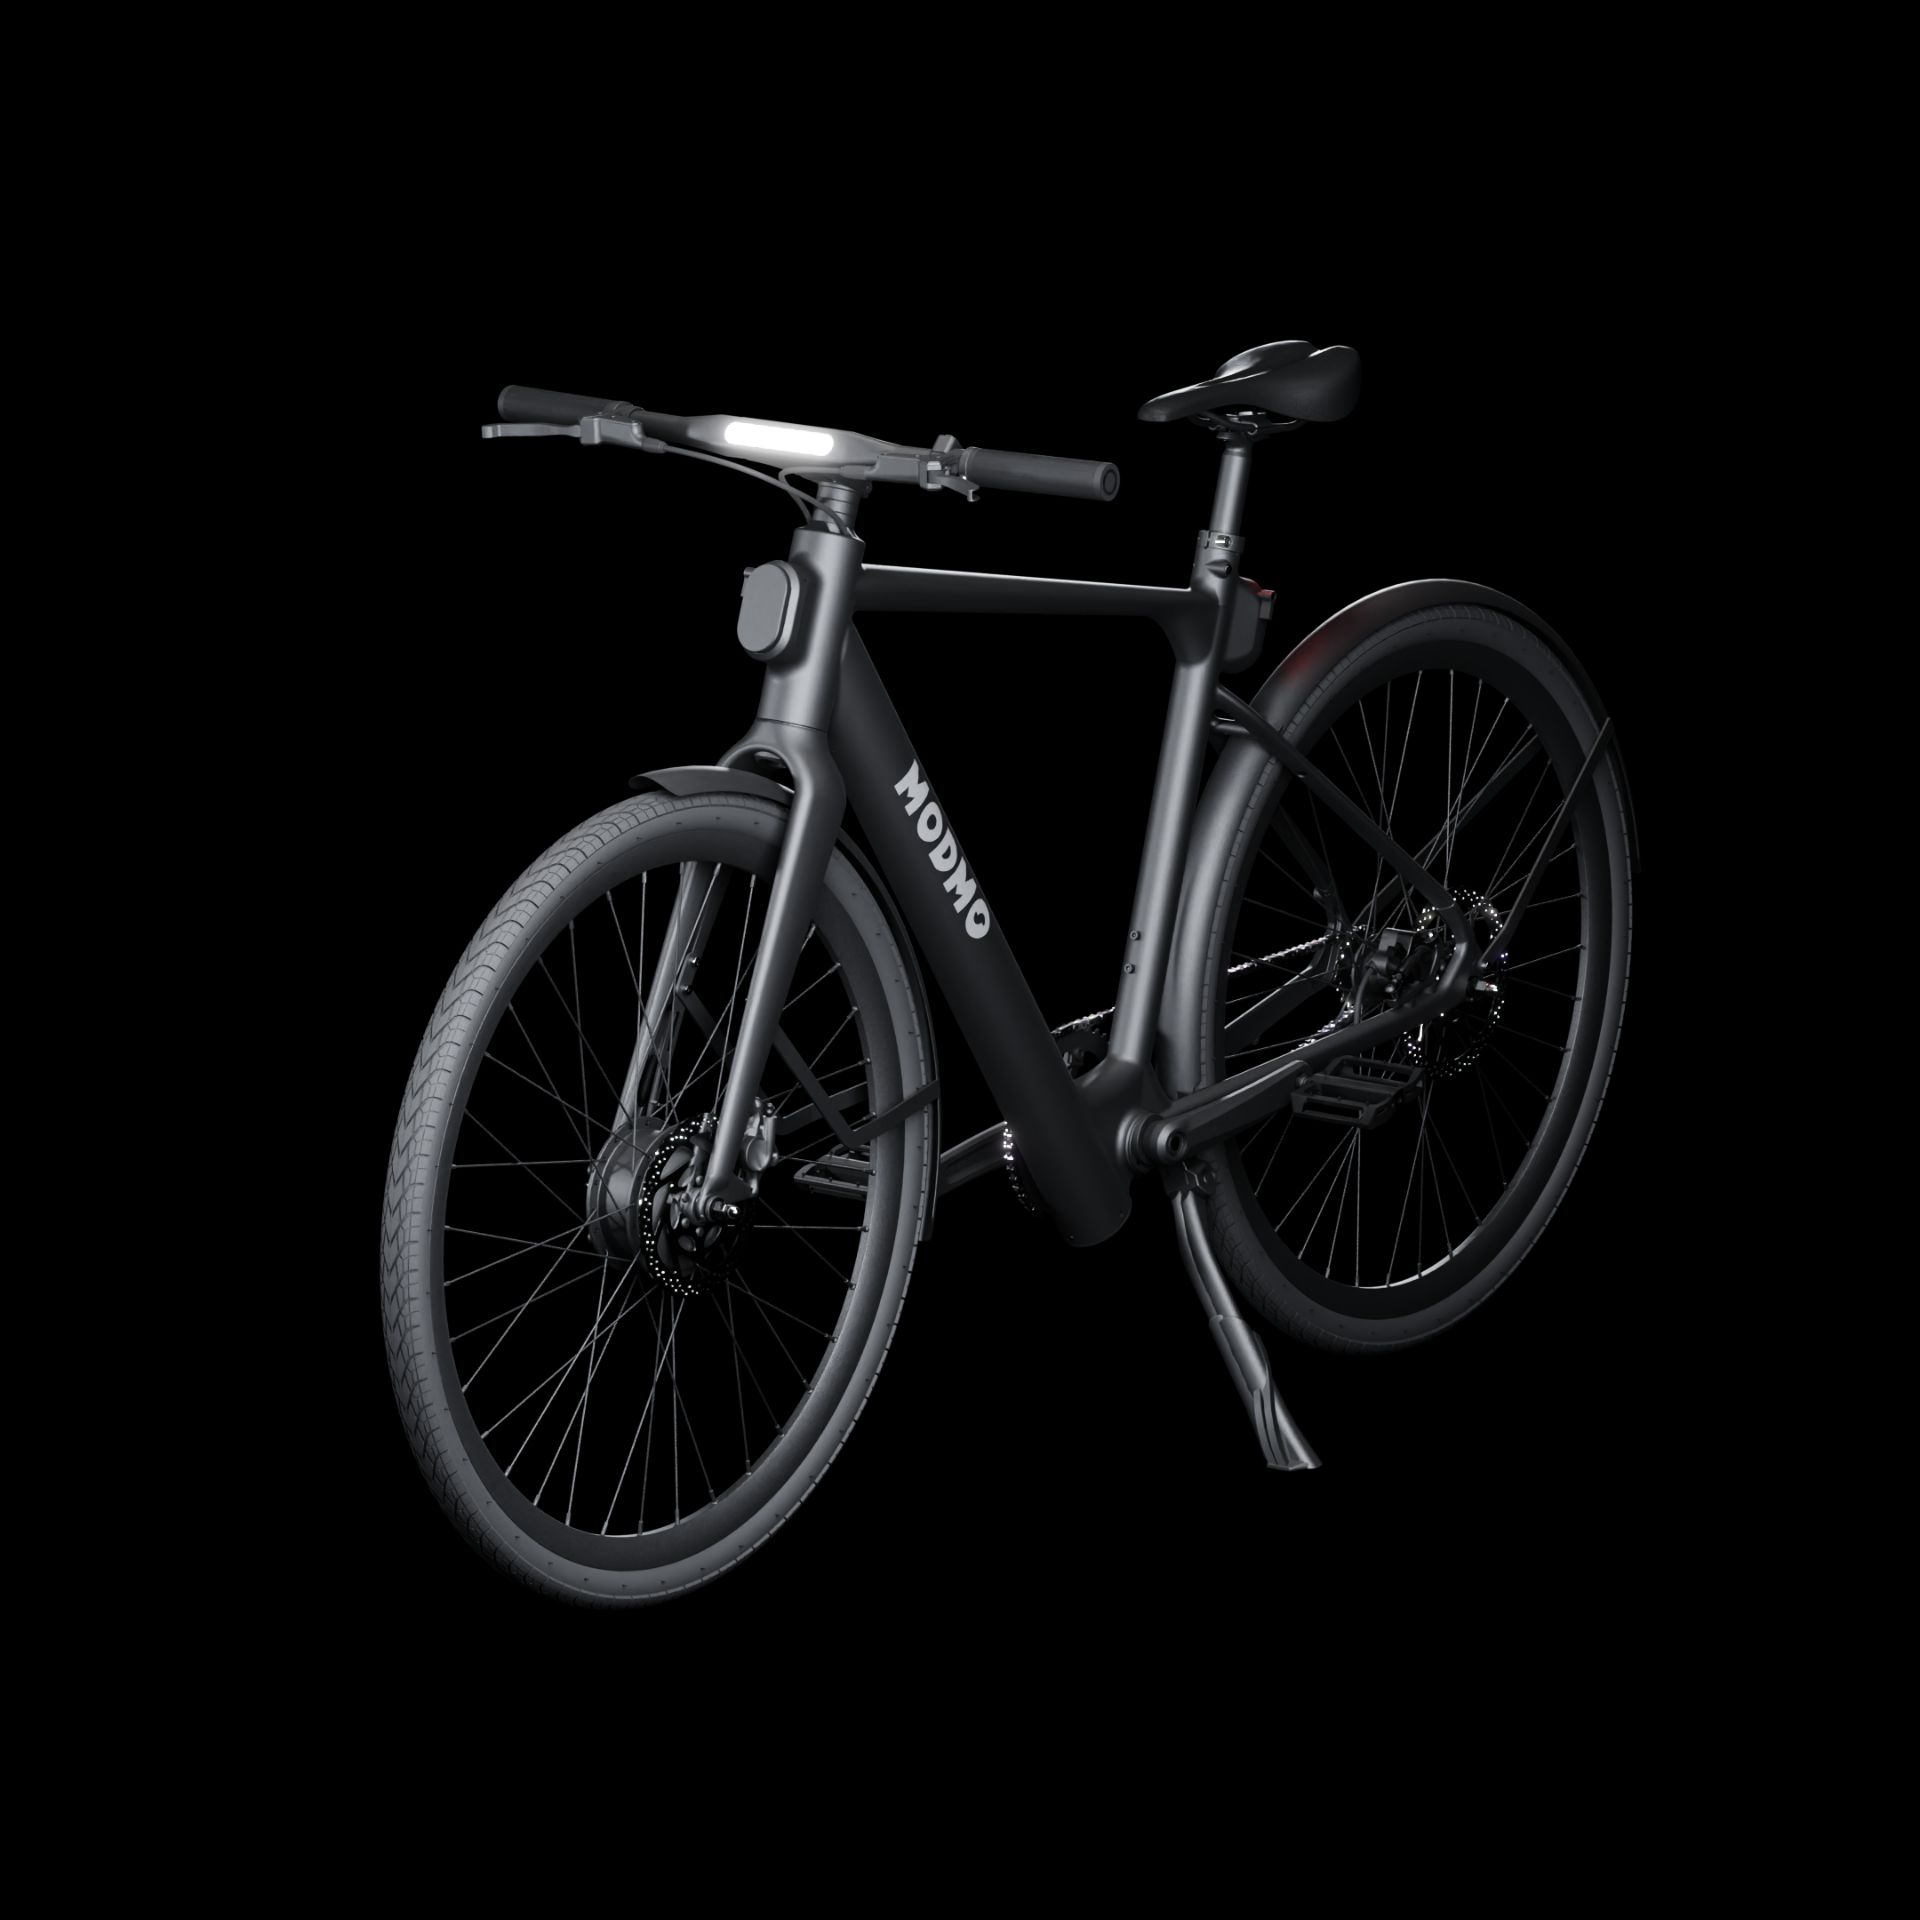 Modmo Saigon+ Electric Bicycle - RRP £2800 - Size S (Rider: 140-155cm) - Image 9 of 14